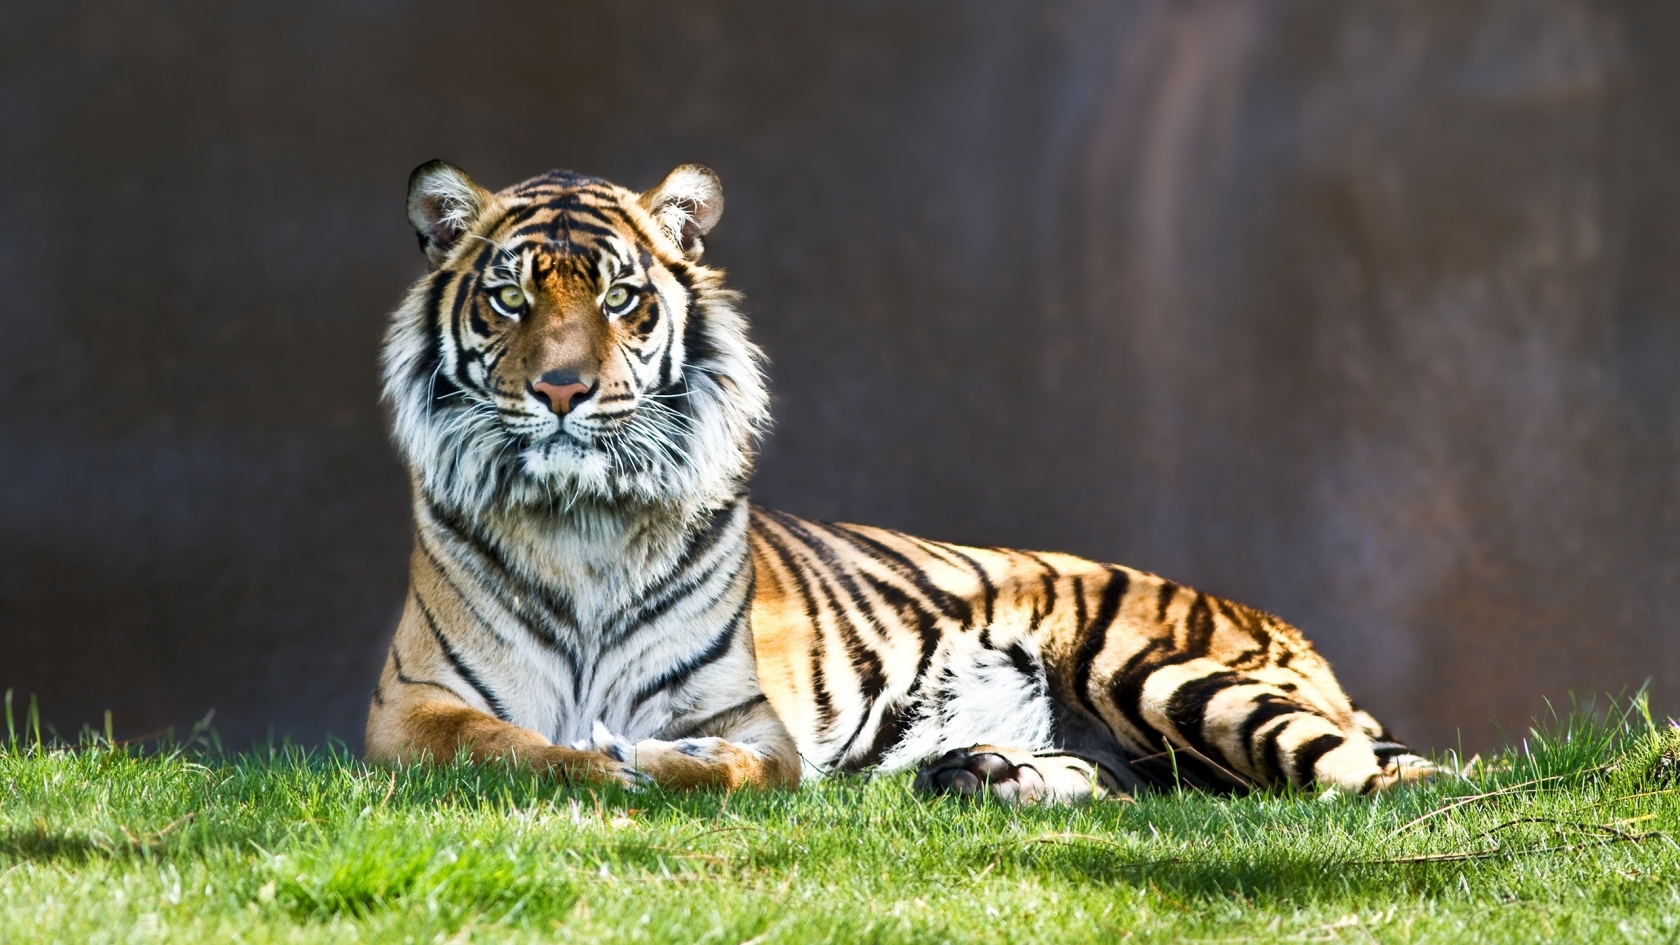 Tiger Thinking for 1680 x 945 HDTV resolution